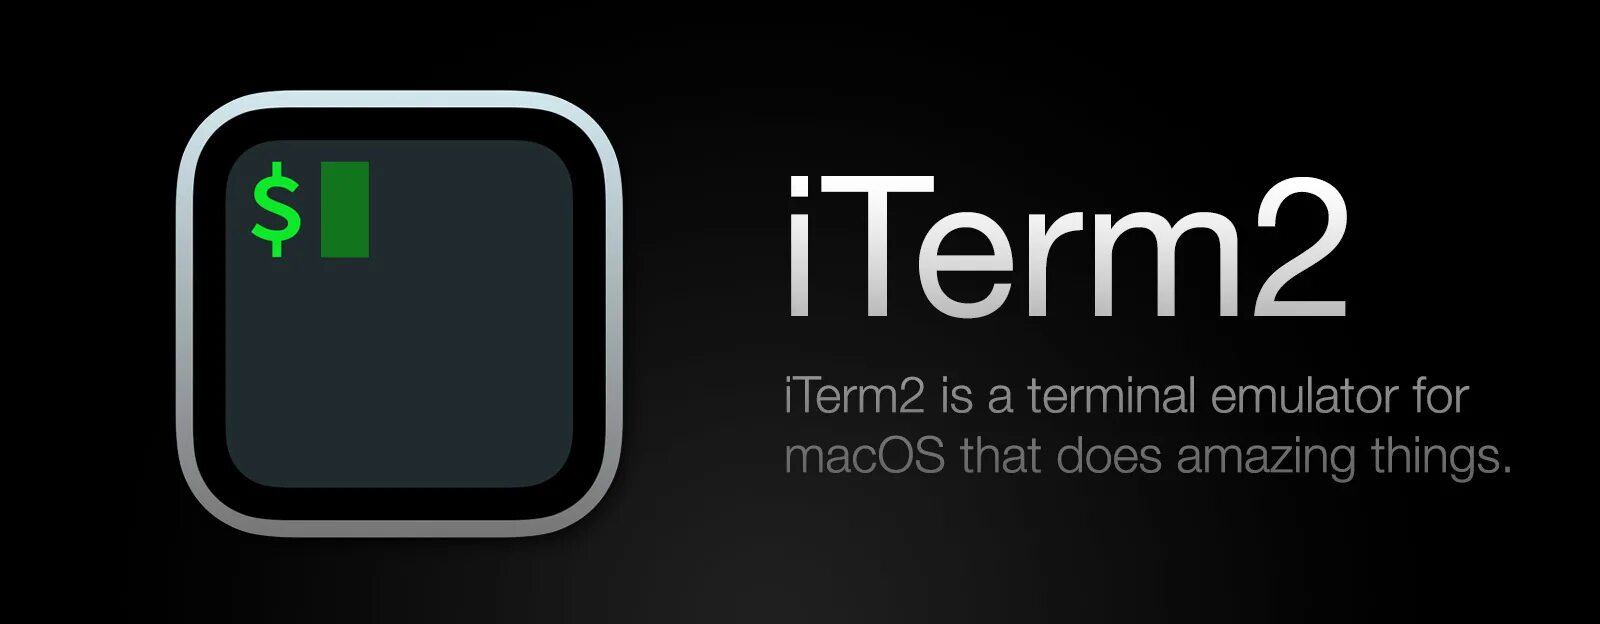 Second term. Iterm2. Iterm Mac os. Iterm Terminal. Iterm2 Windows.